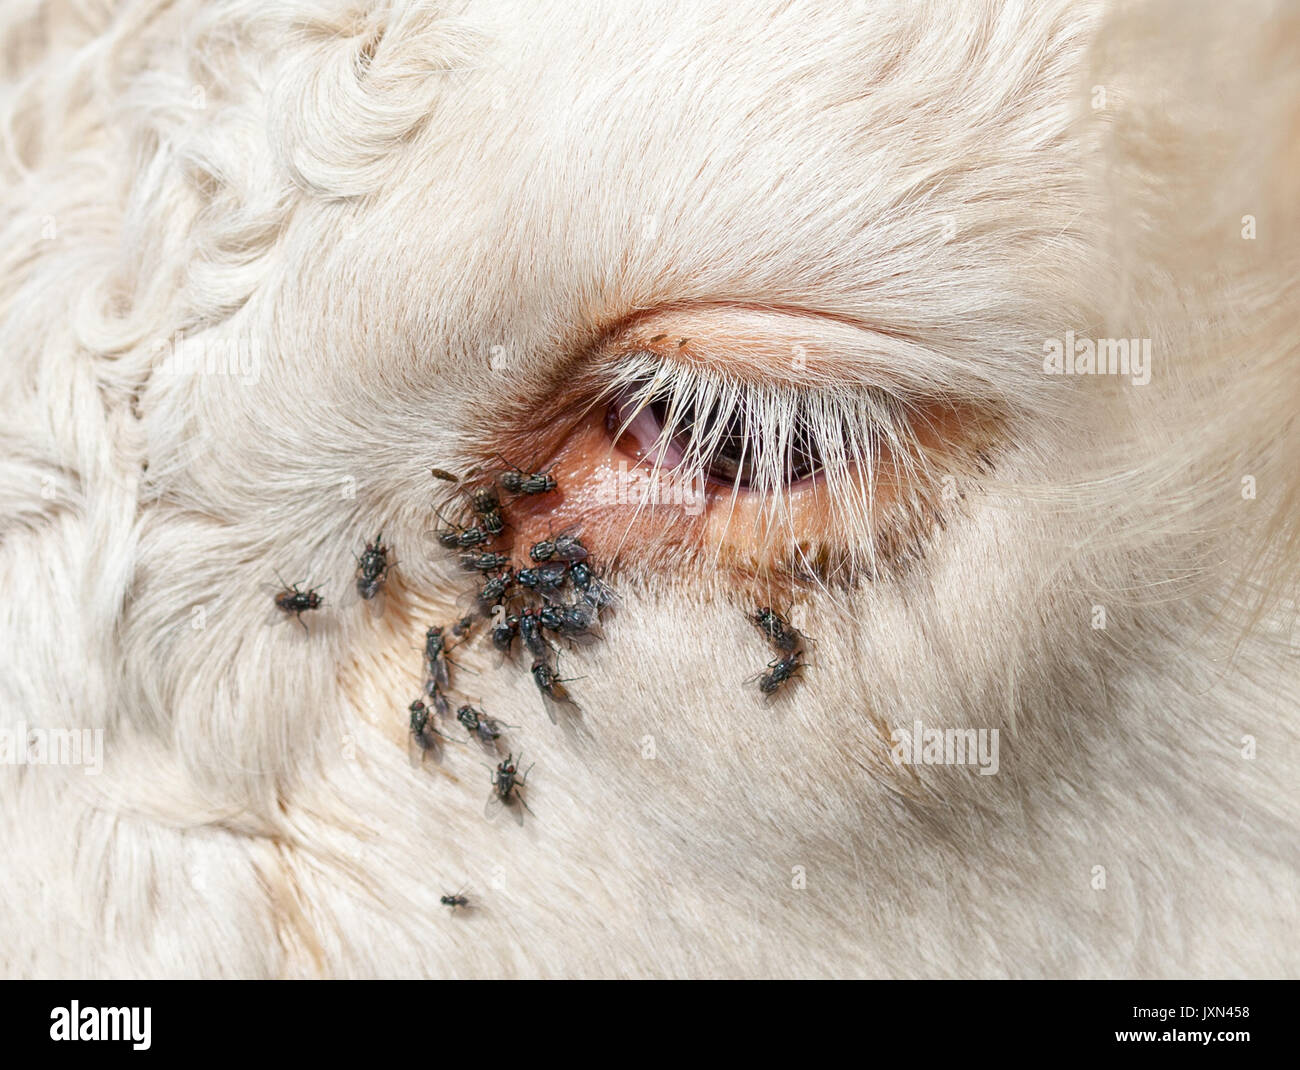 Cow eye with flies. Stock Photo